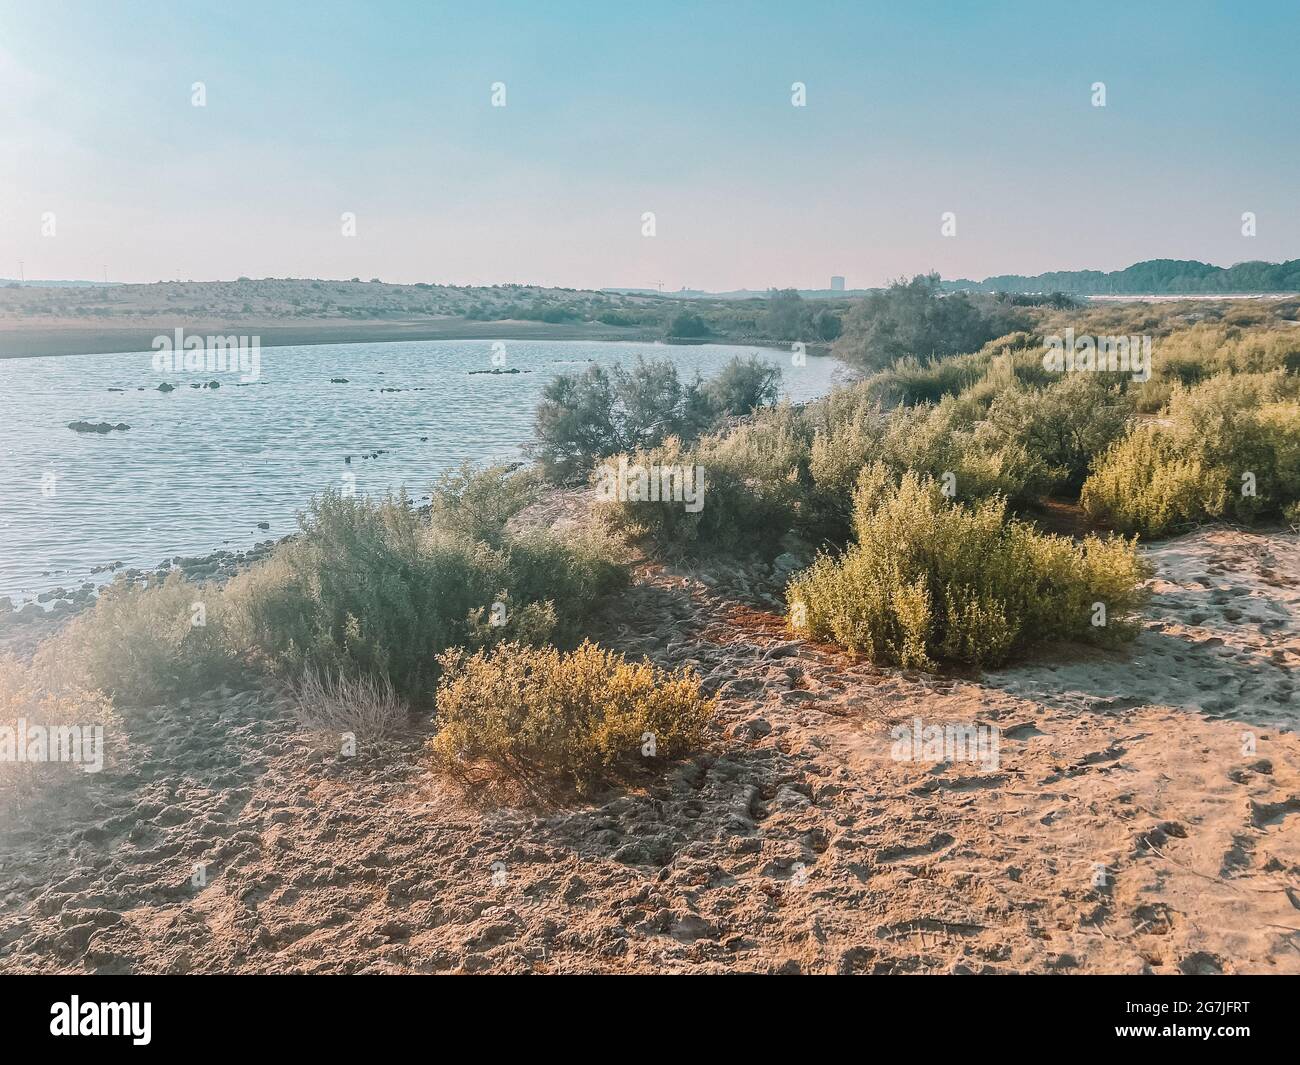 Postre plantas silvestres y naturaleza | espectacular vista del paisaje en la Reserva de Humedales al Wathba en Abu Dhabi, EAU | Lagos de salar de la costa (sabkha) Foto de stock